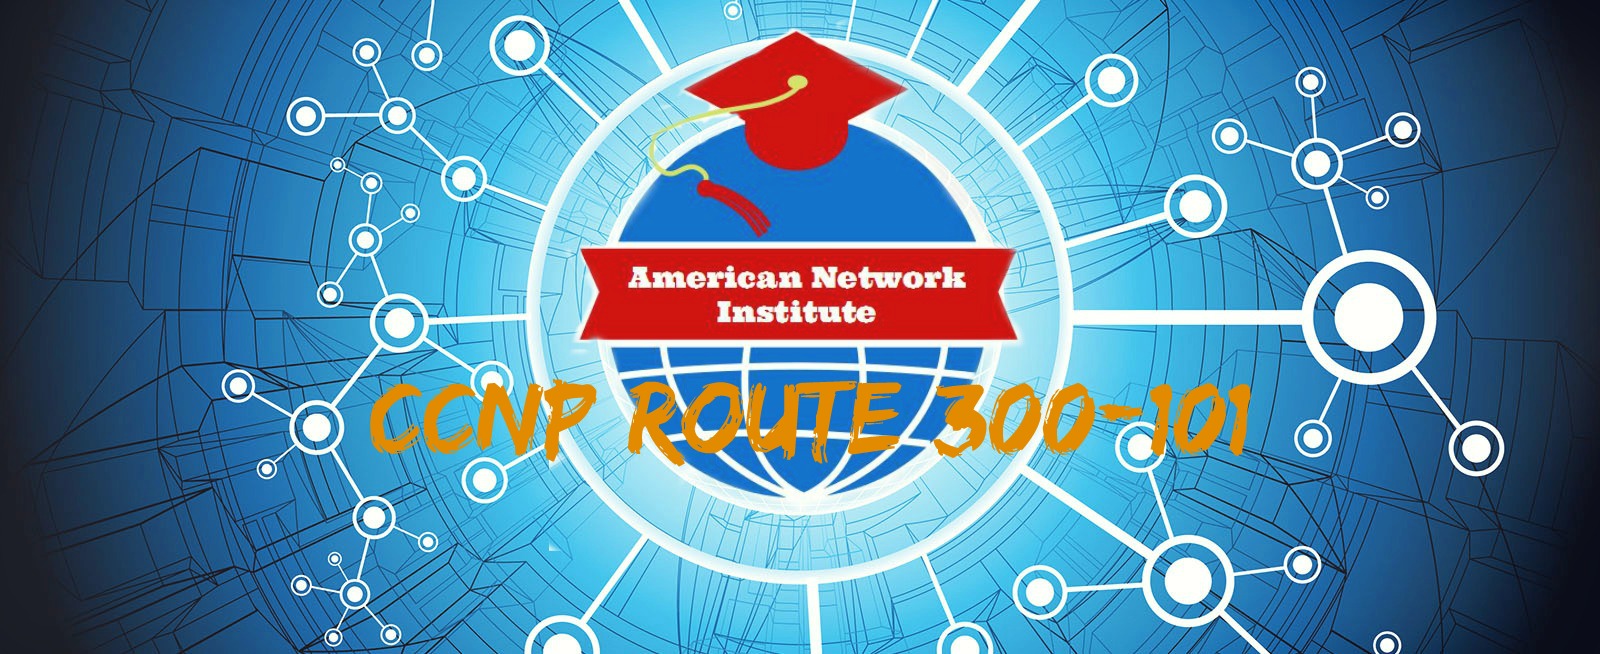 American Network Institute (ANI)